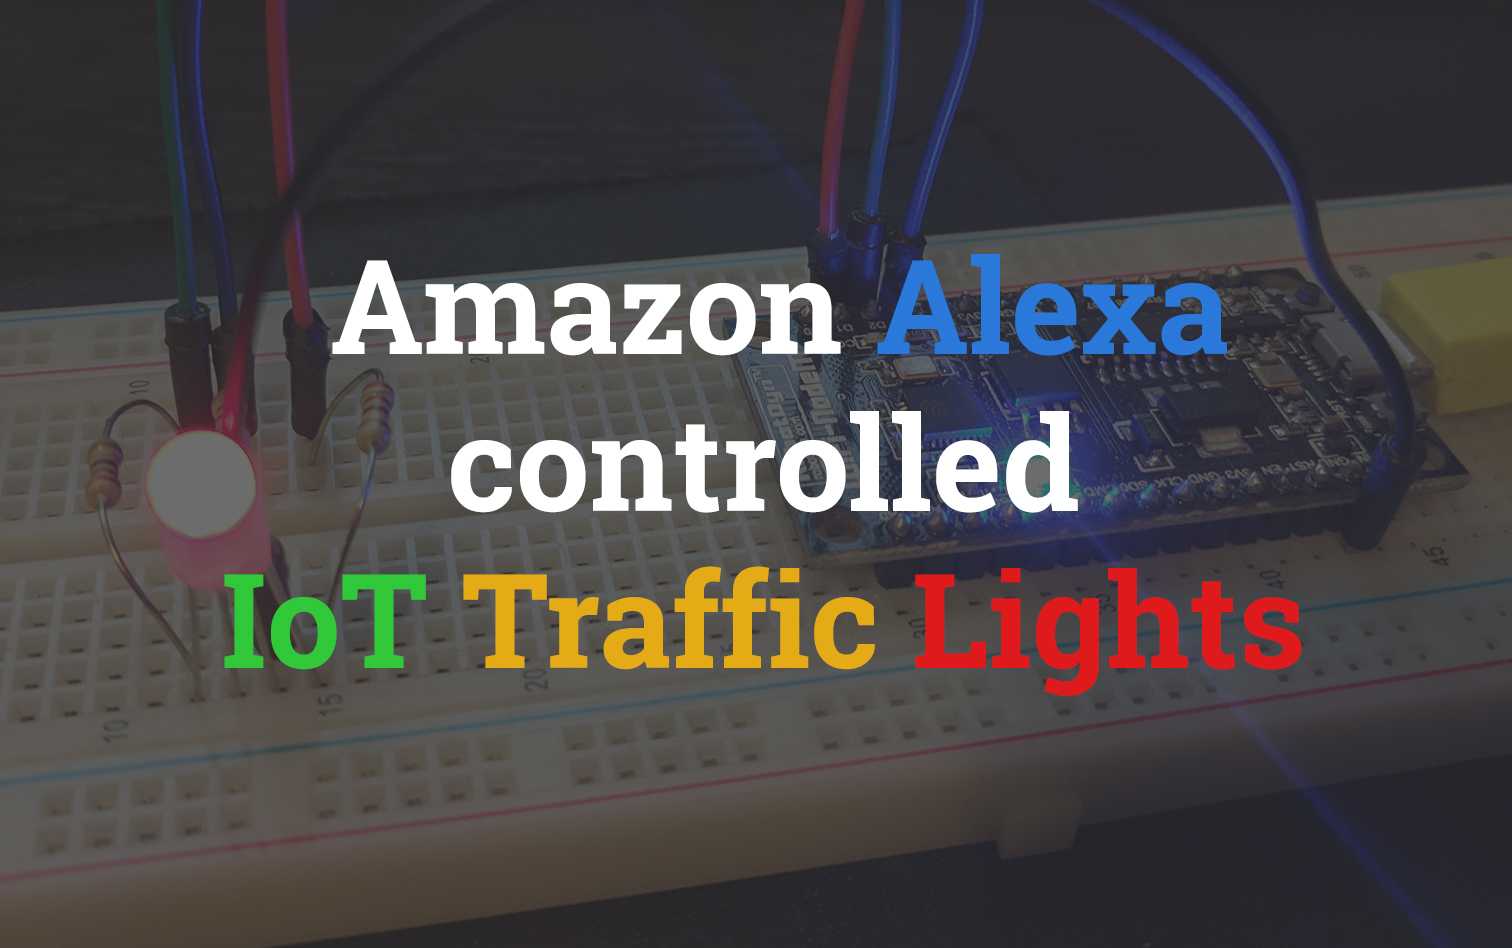 Amazon Alexa controlled IoT Traffic Lights